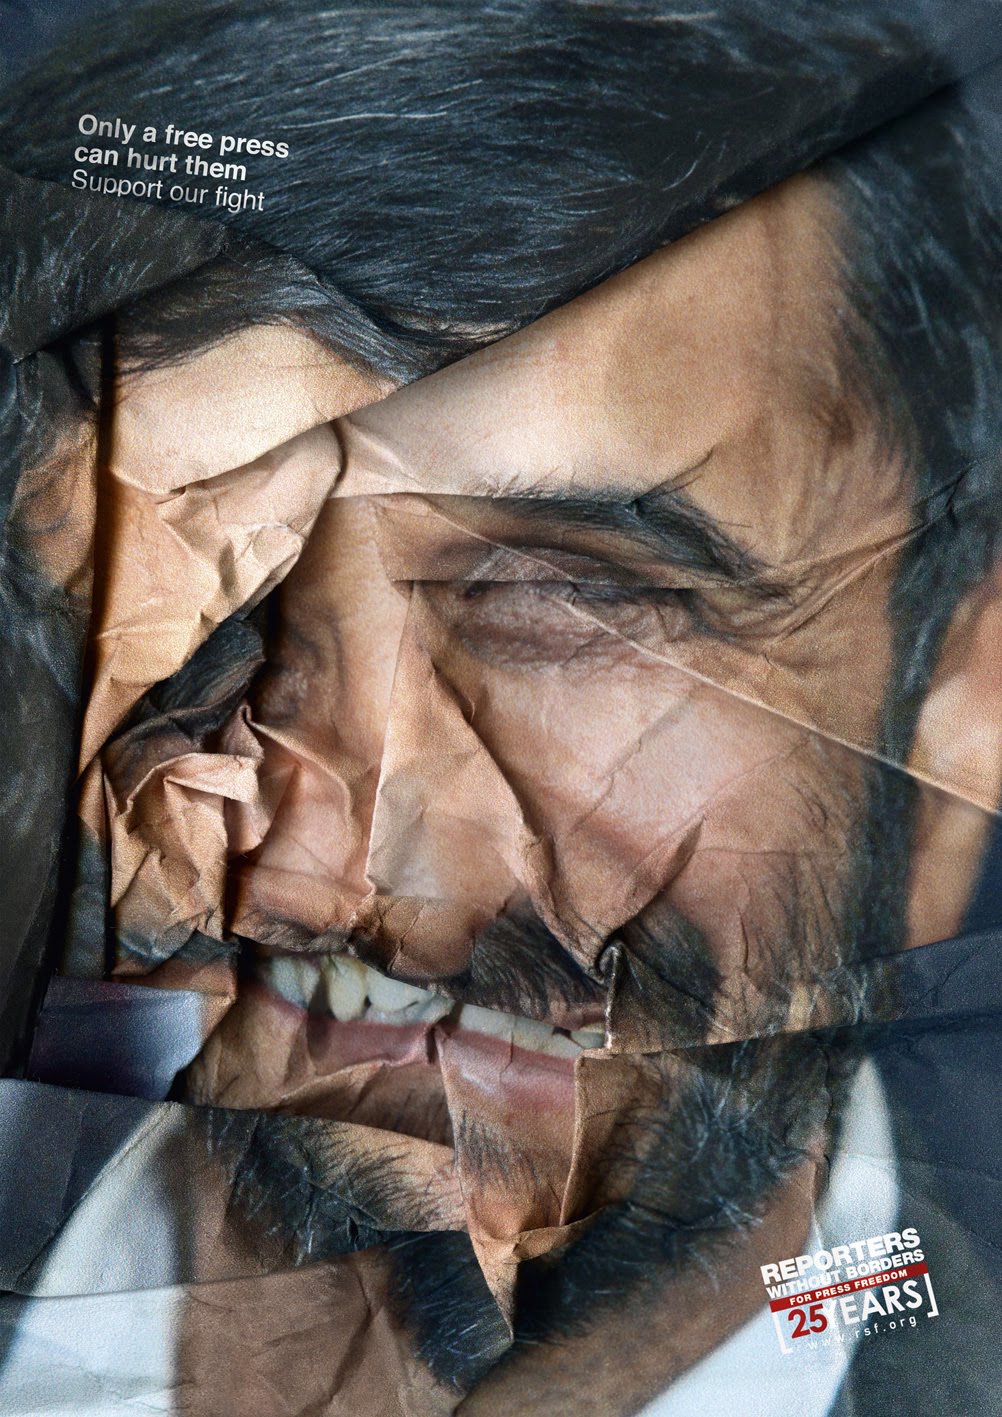 http://4.bp.blogspot.com/_42nL05s3A-8/S-A47MAhXhI/AAAAAAAACjQ/izNqhAoypO4/s1600/reporters_Ahmadinejad_1.jpg